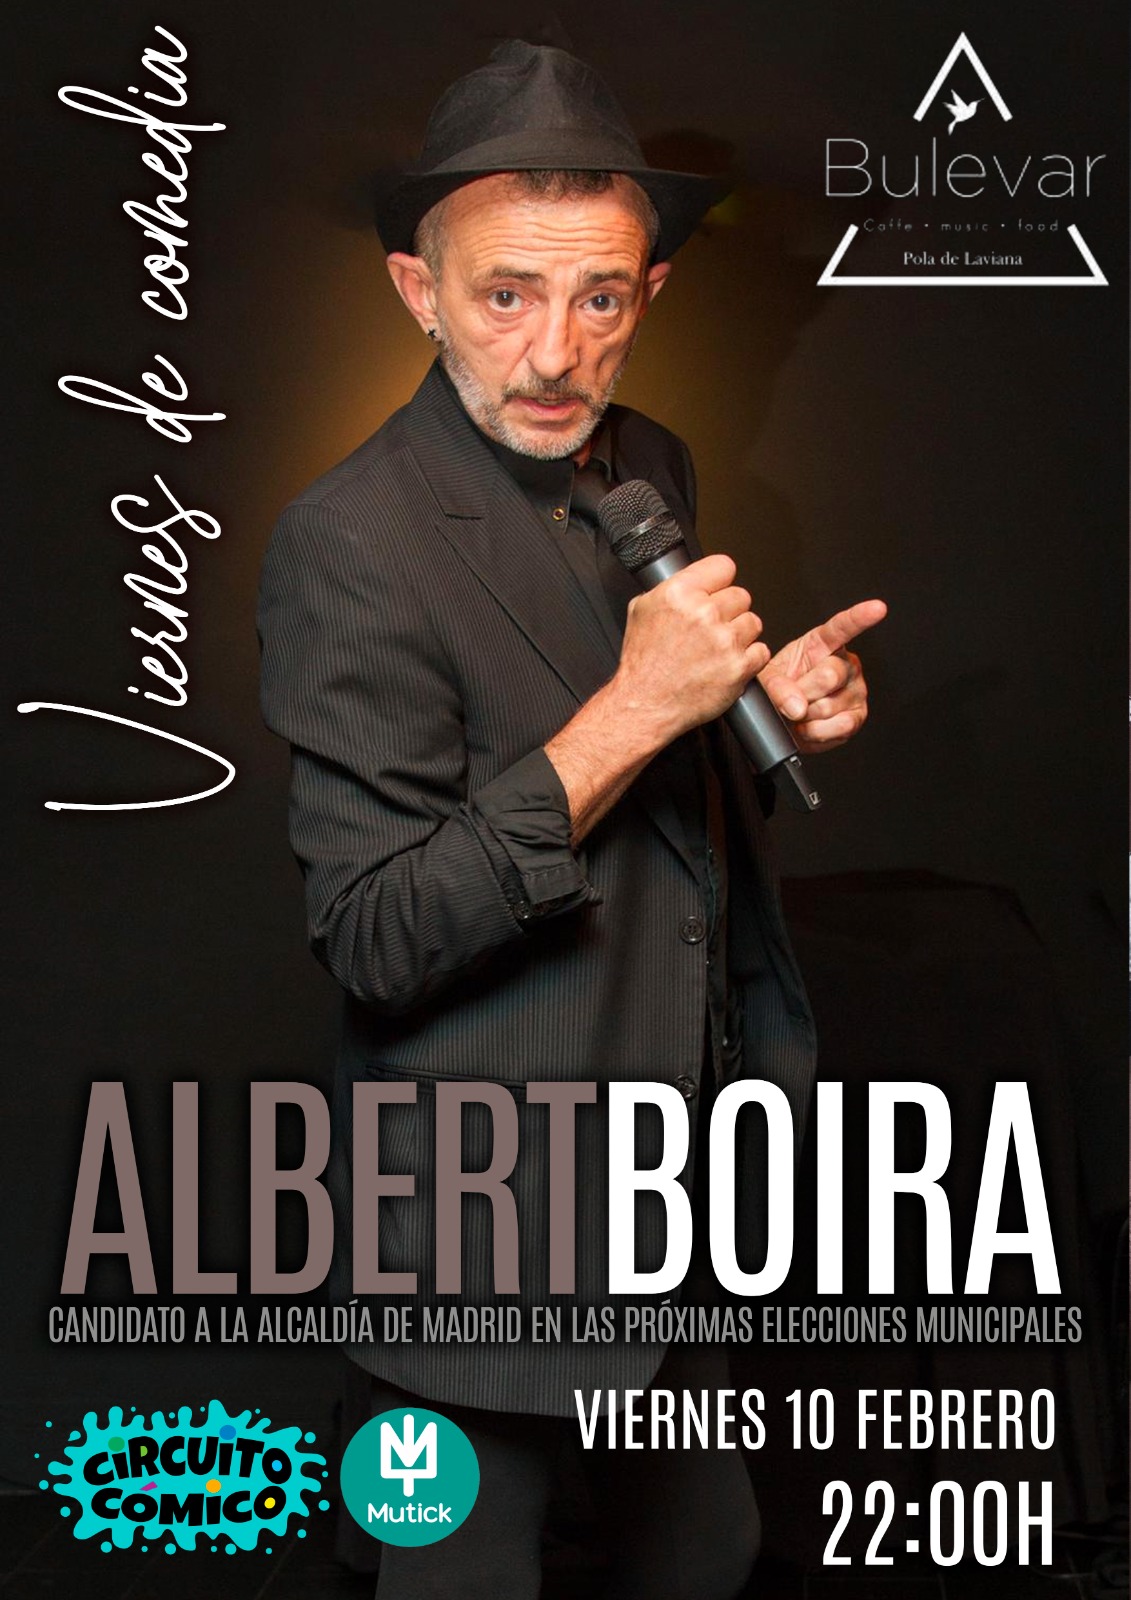 Viernes de comedia en Bulevar con ALBERT BOIRA - Mutick